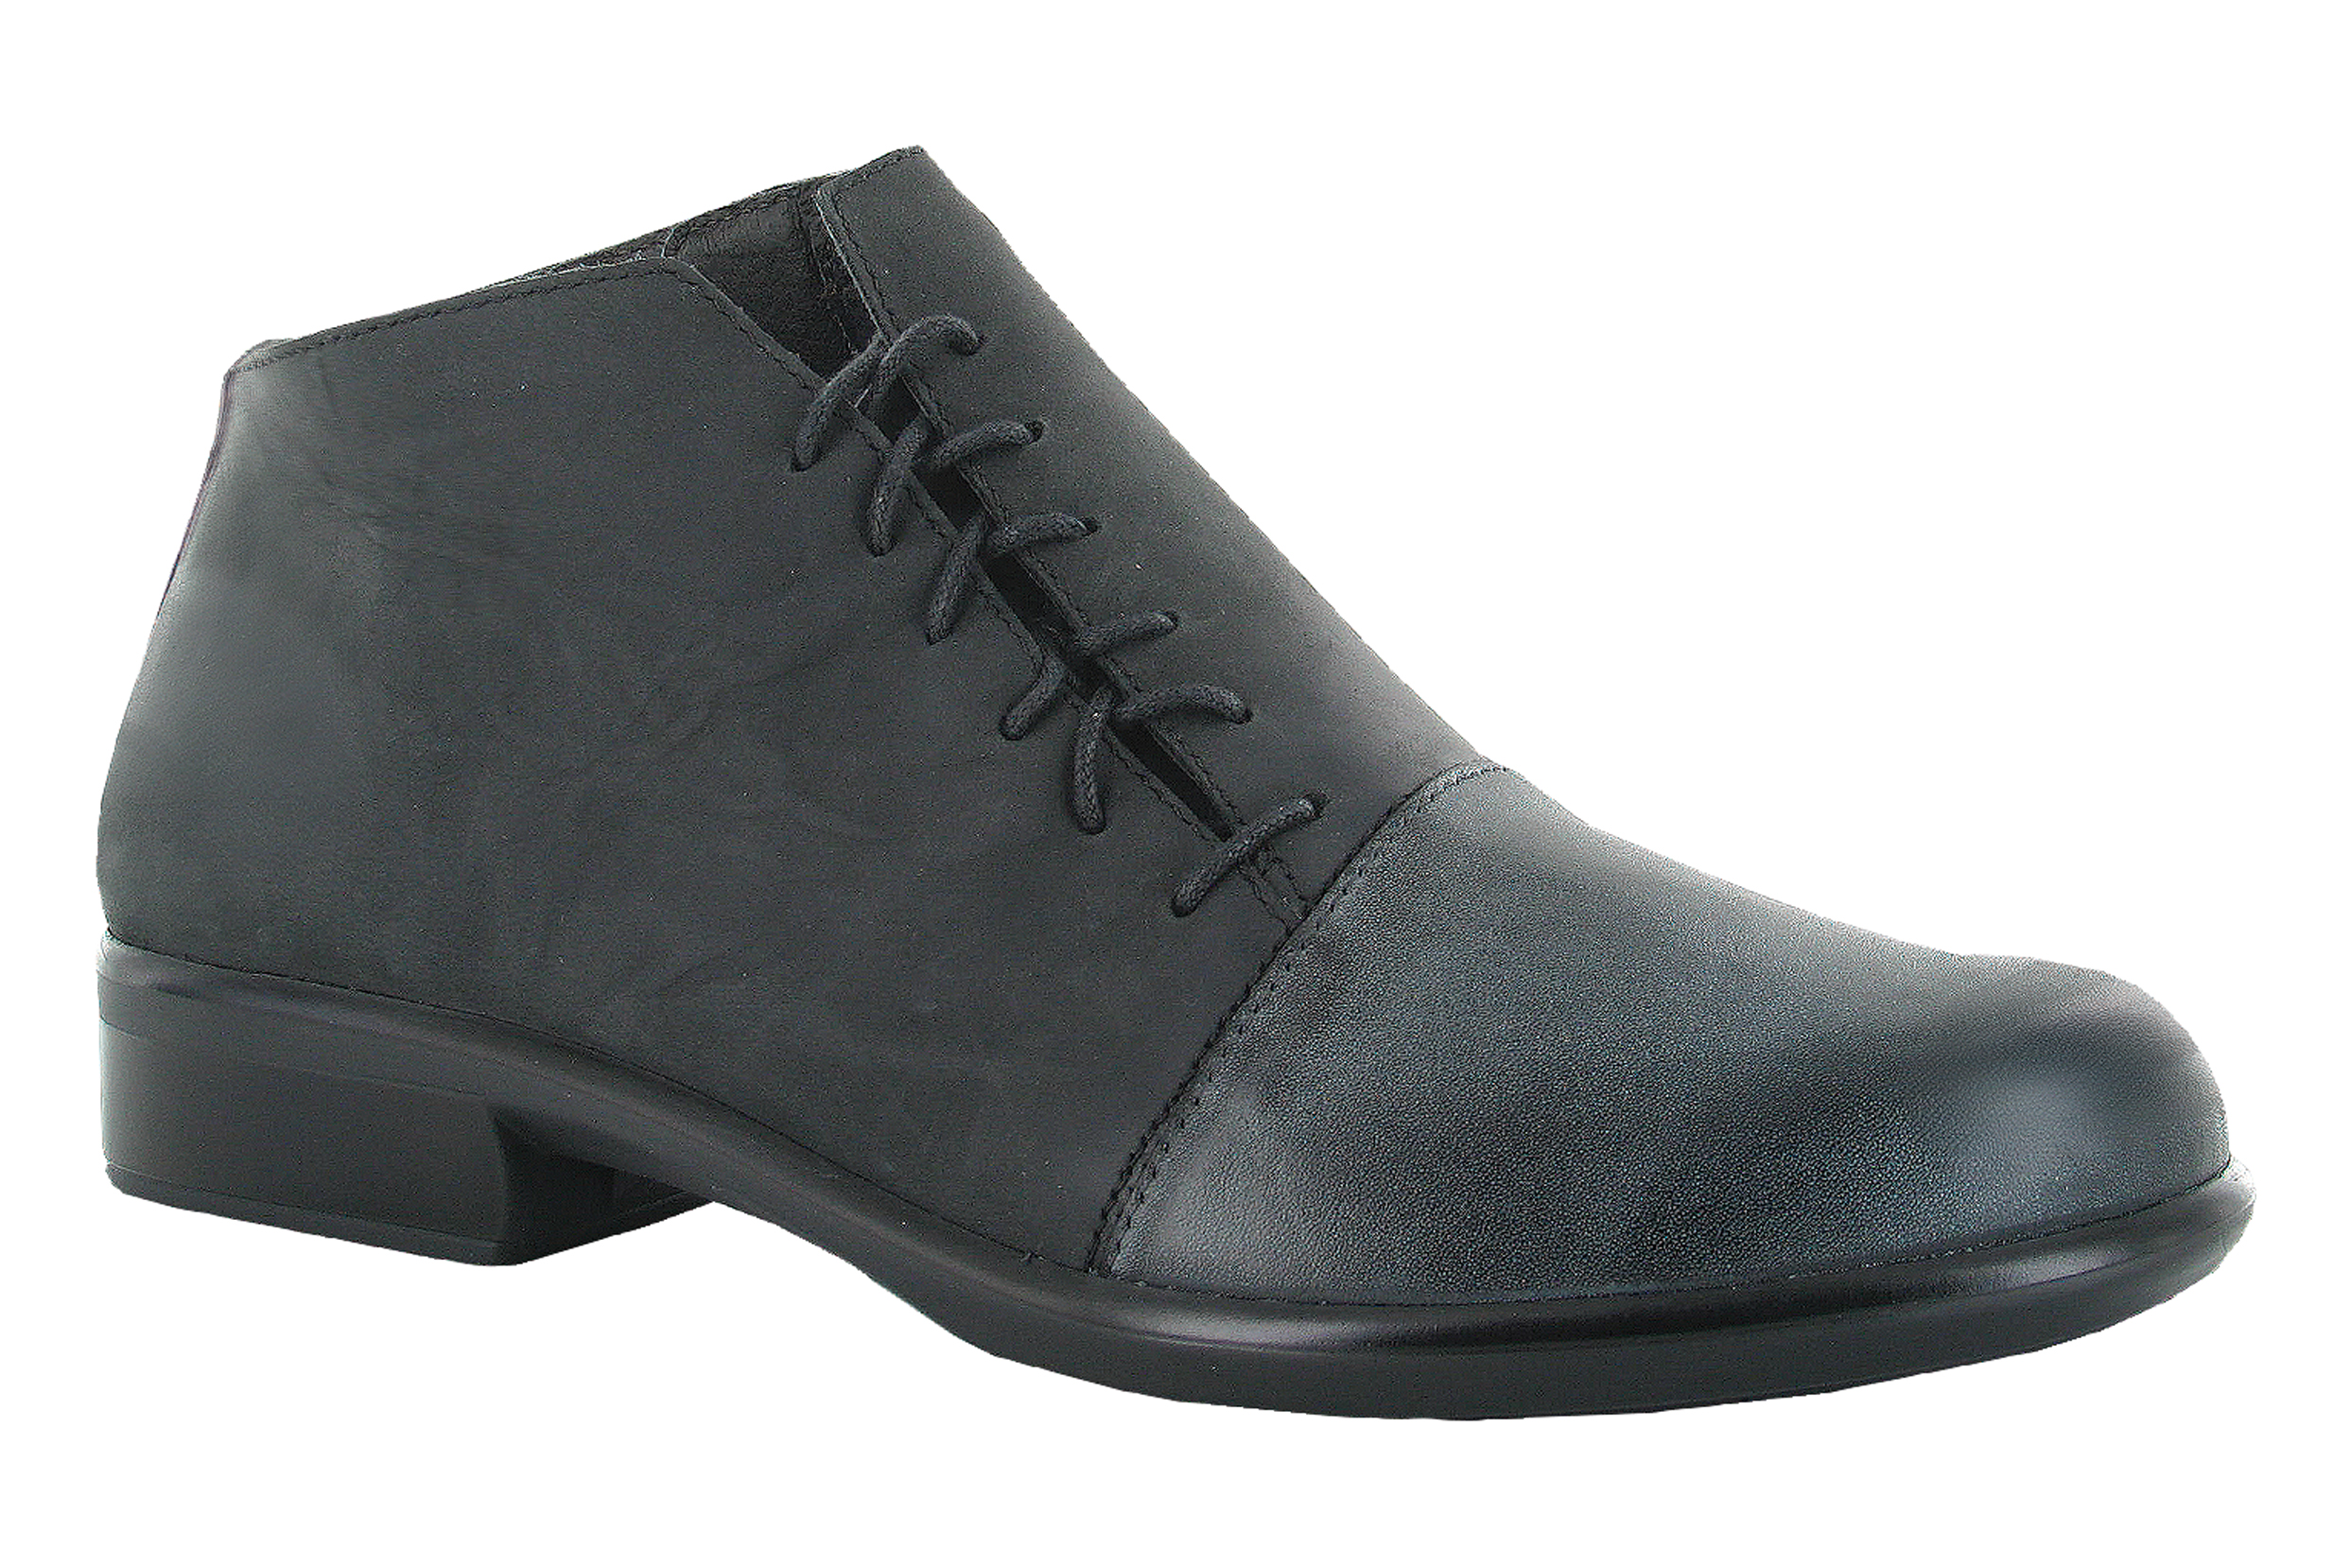 Taku Vintage Fog EU42 US 11 New Naot Leather Ankle Boots w/ Stud Details 